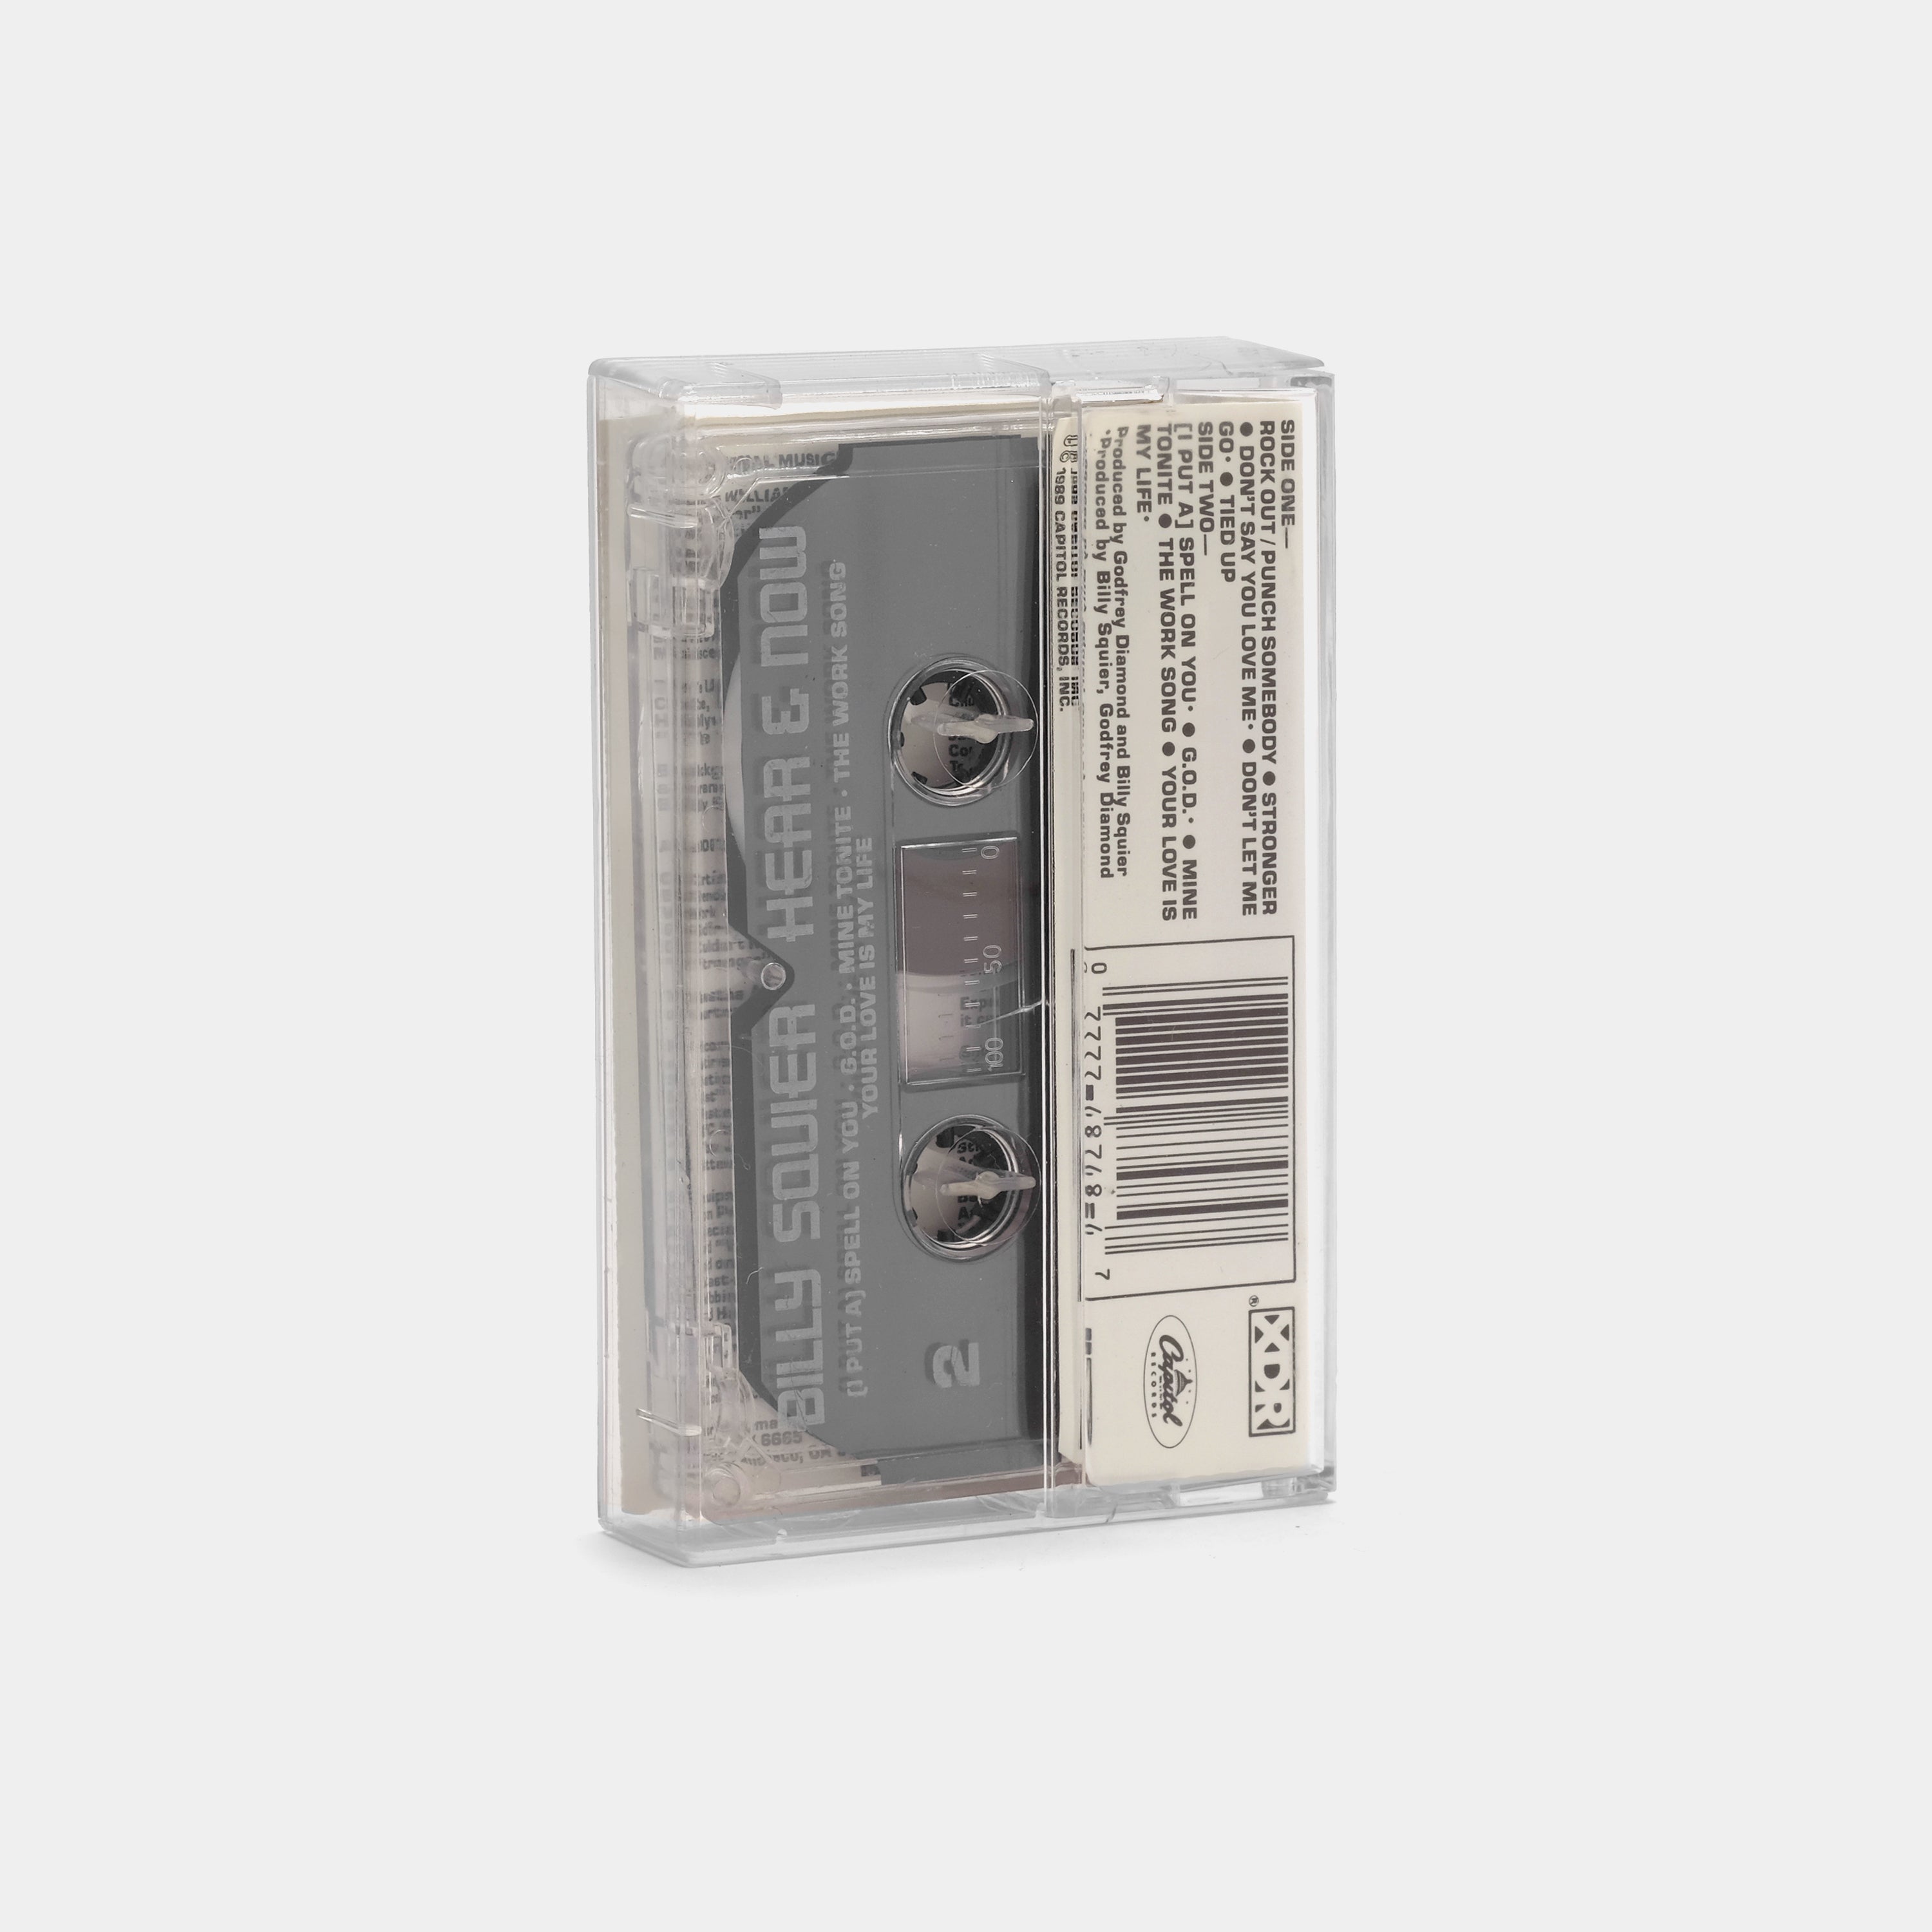 Billy Squier - Hear & Now Cassette Tape